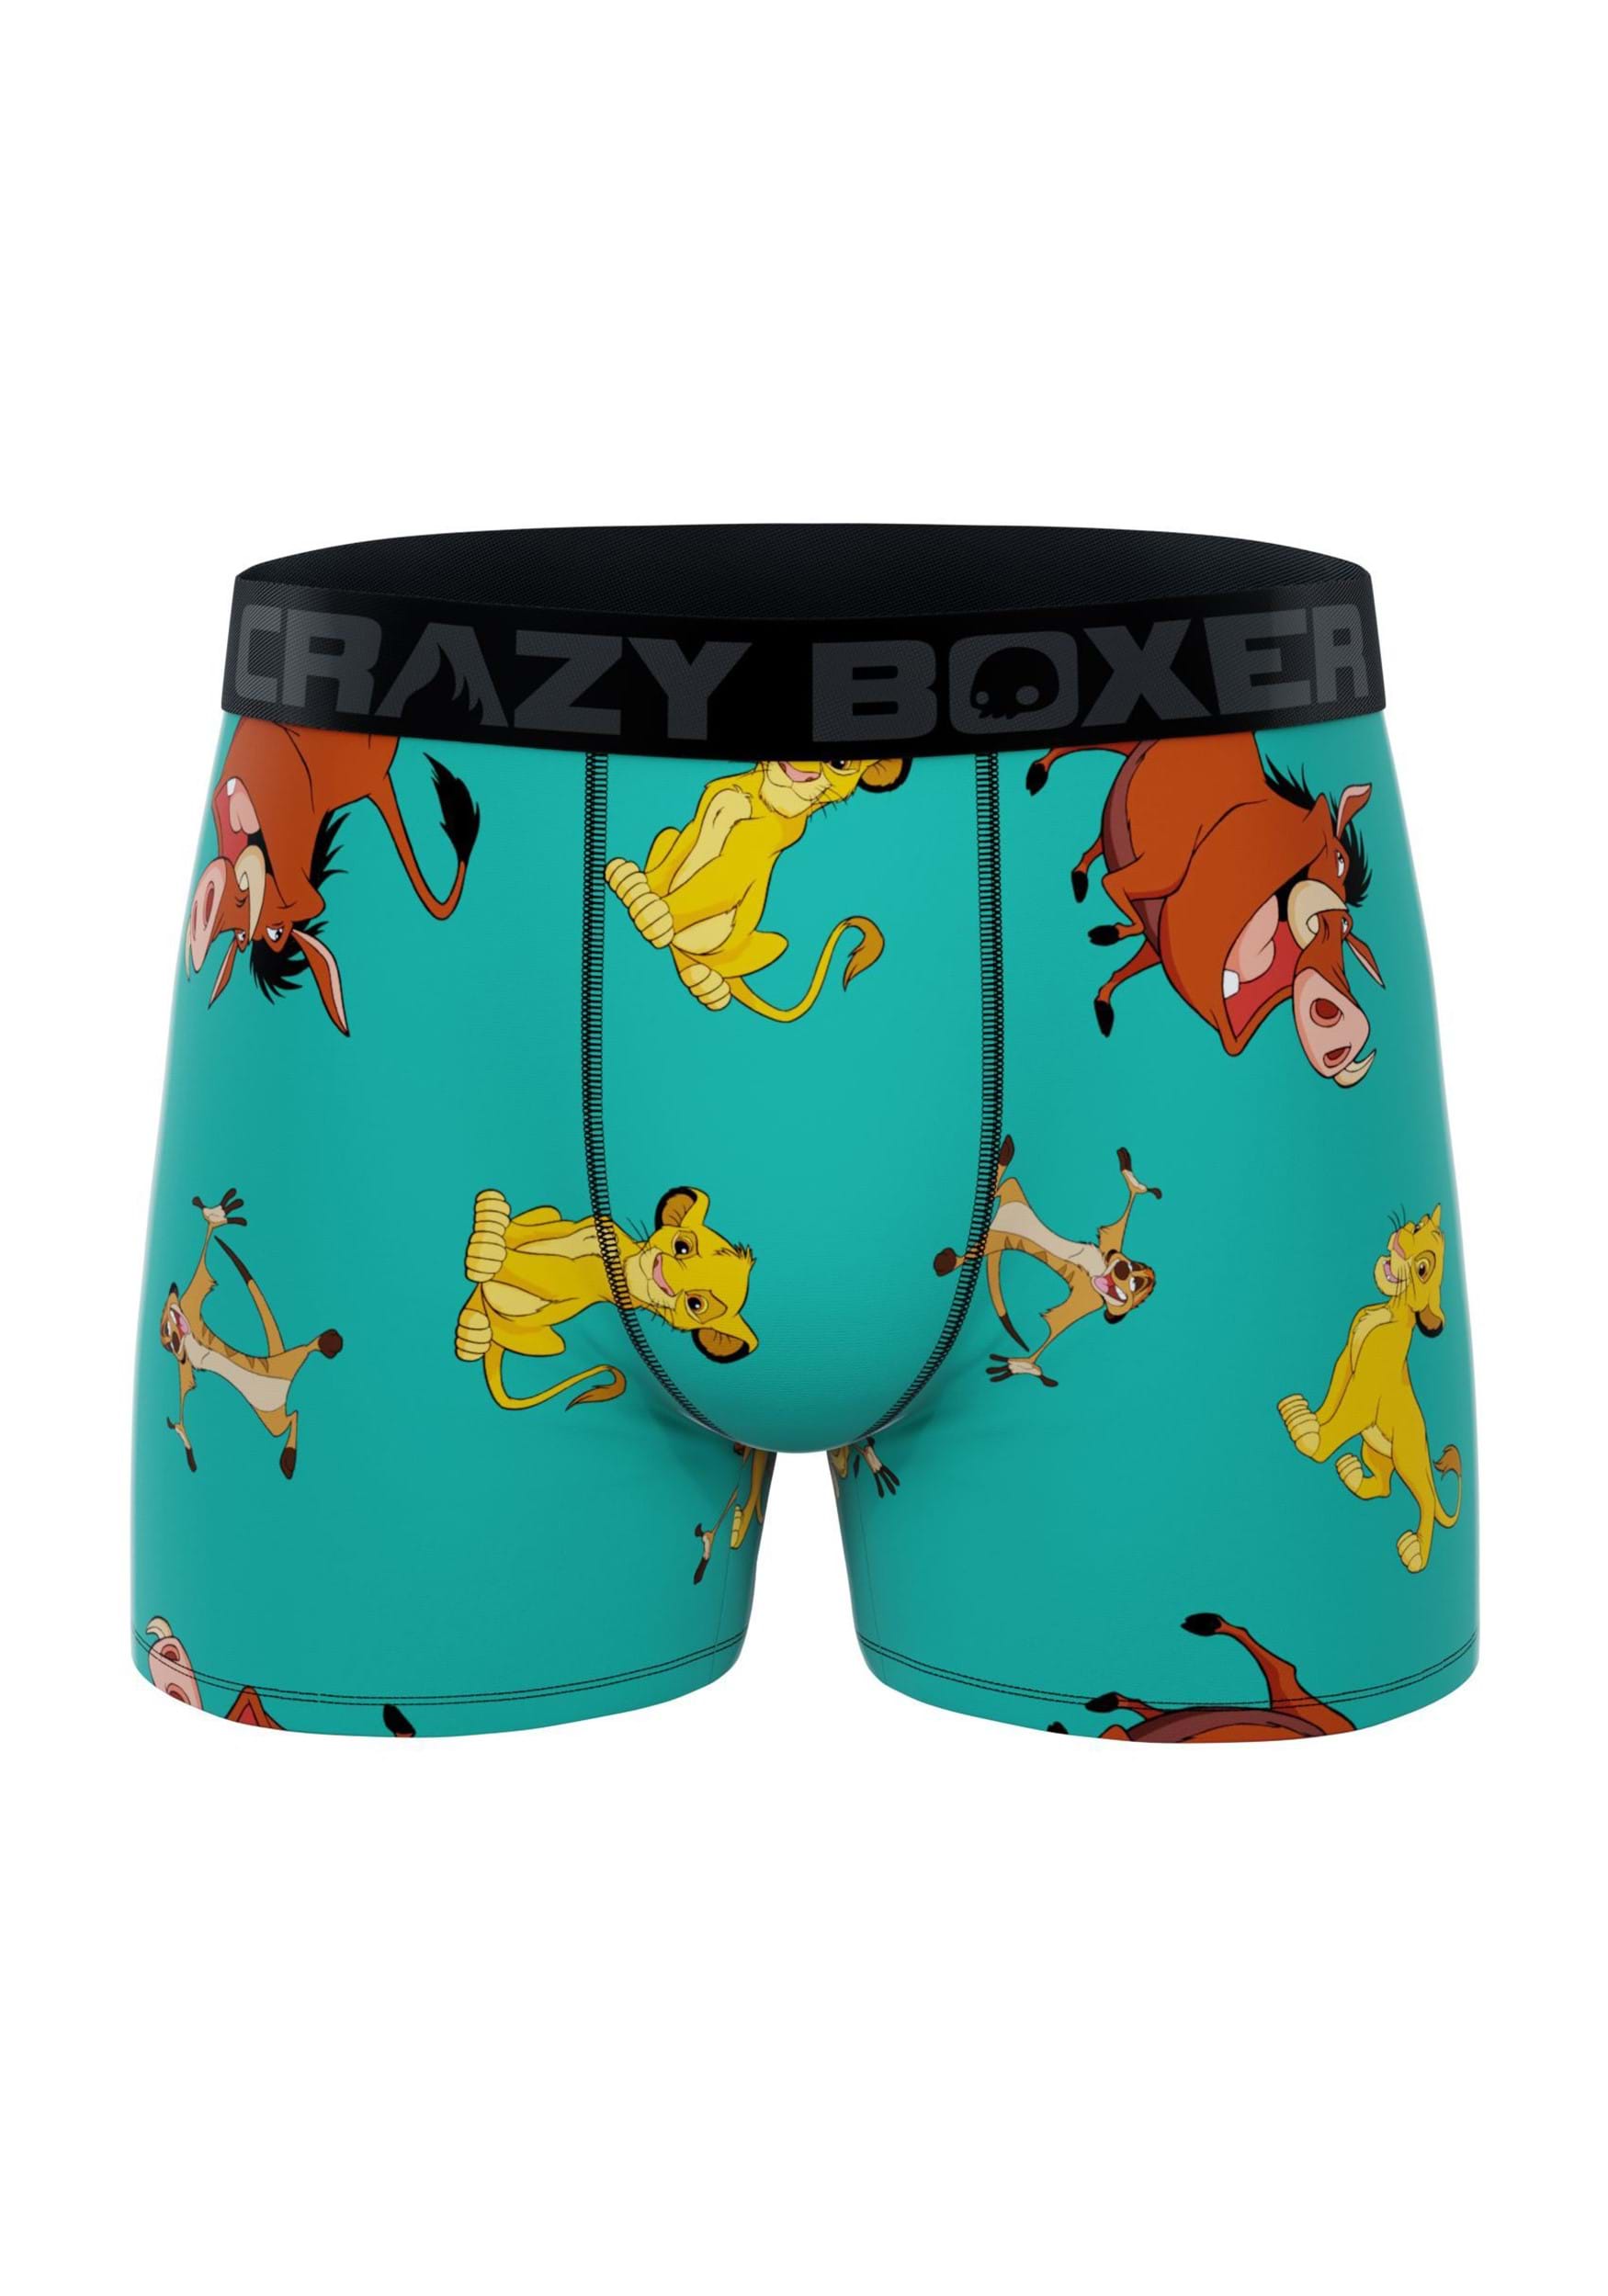 CRAZYBOXER South Park Gift Box Men's Boxer Briefs (Creative Packaging)